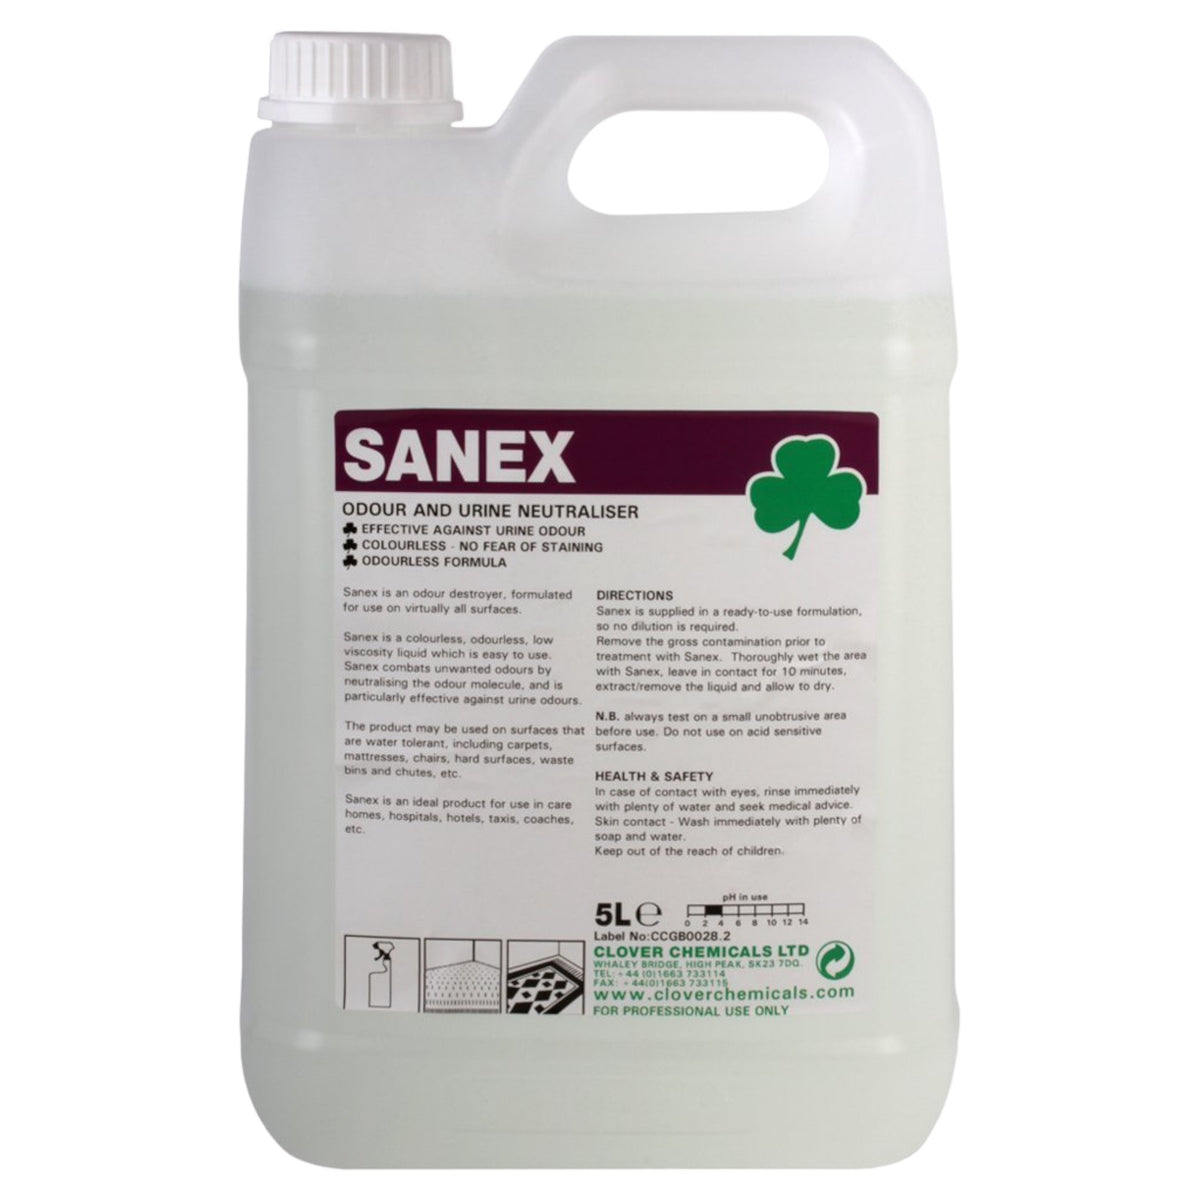 Clover Chemicals Sanex Deodoriser and Urine Neutraliser 5 Litre